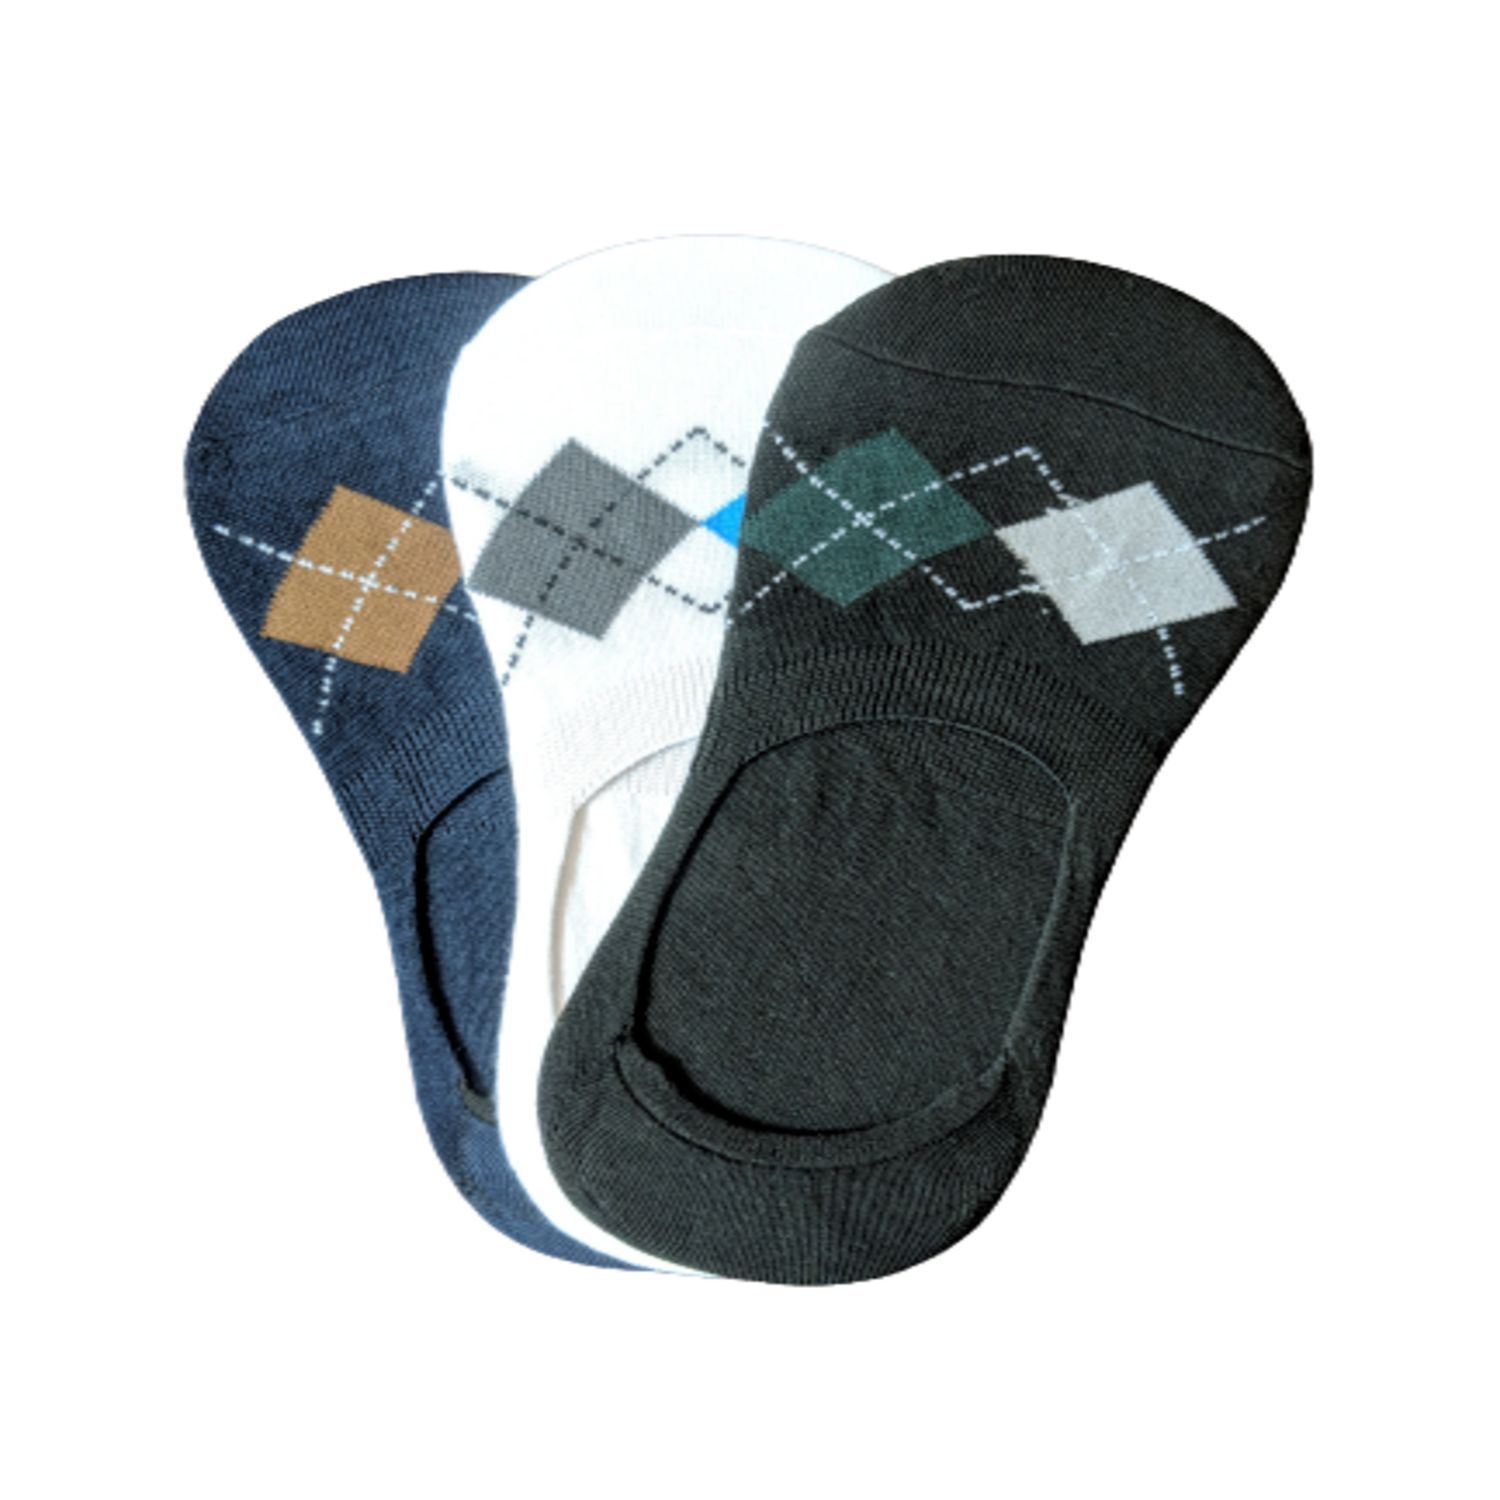 Closet Code Formal Look Loafer Socks - Multi-Color (Free Size)